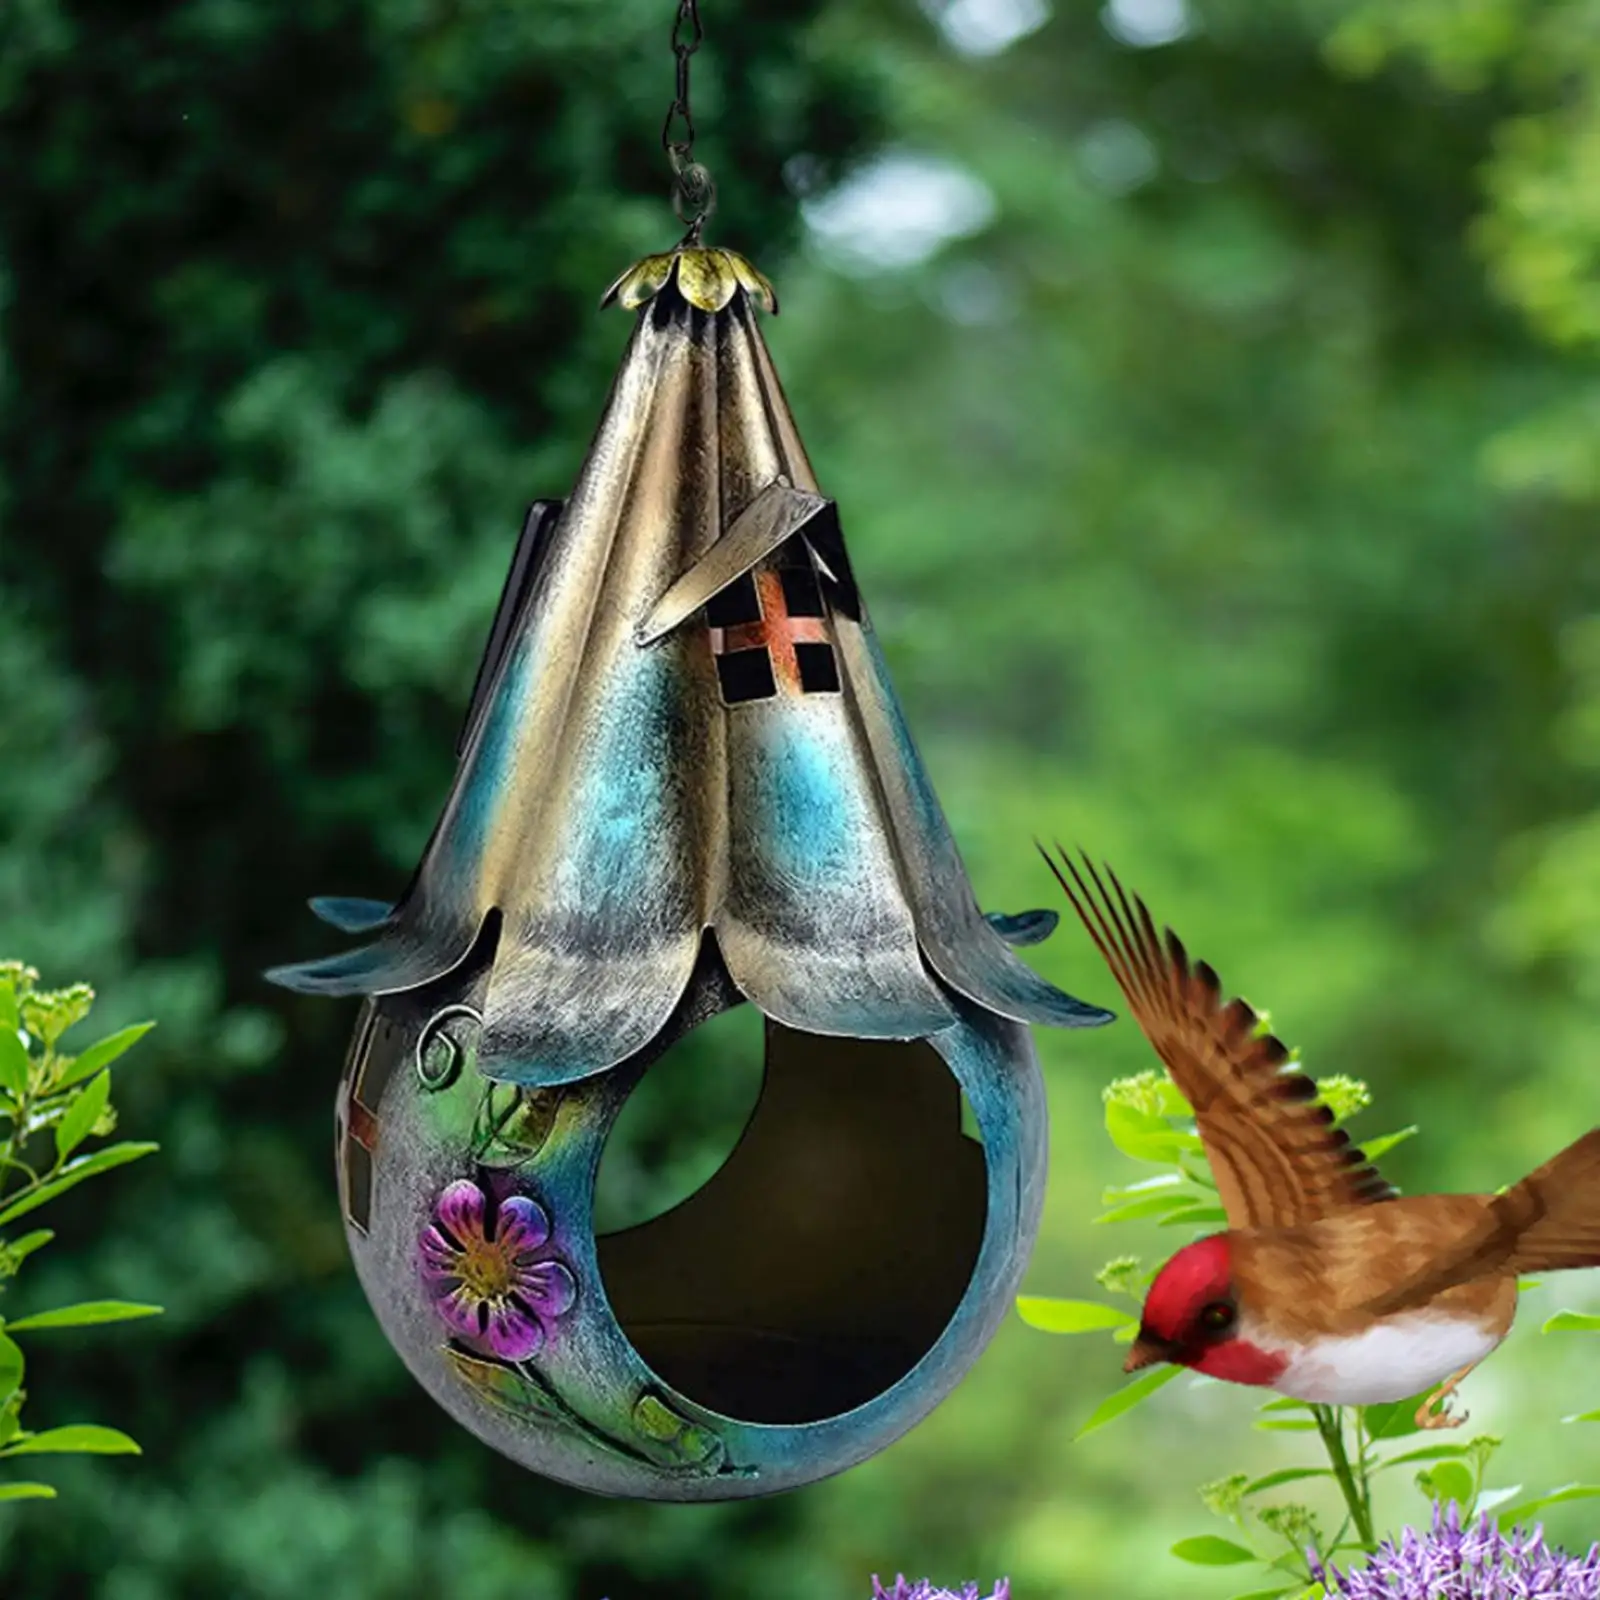  Powered Hanging Pendant Decorative Weatherproof  Outside Outdoor